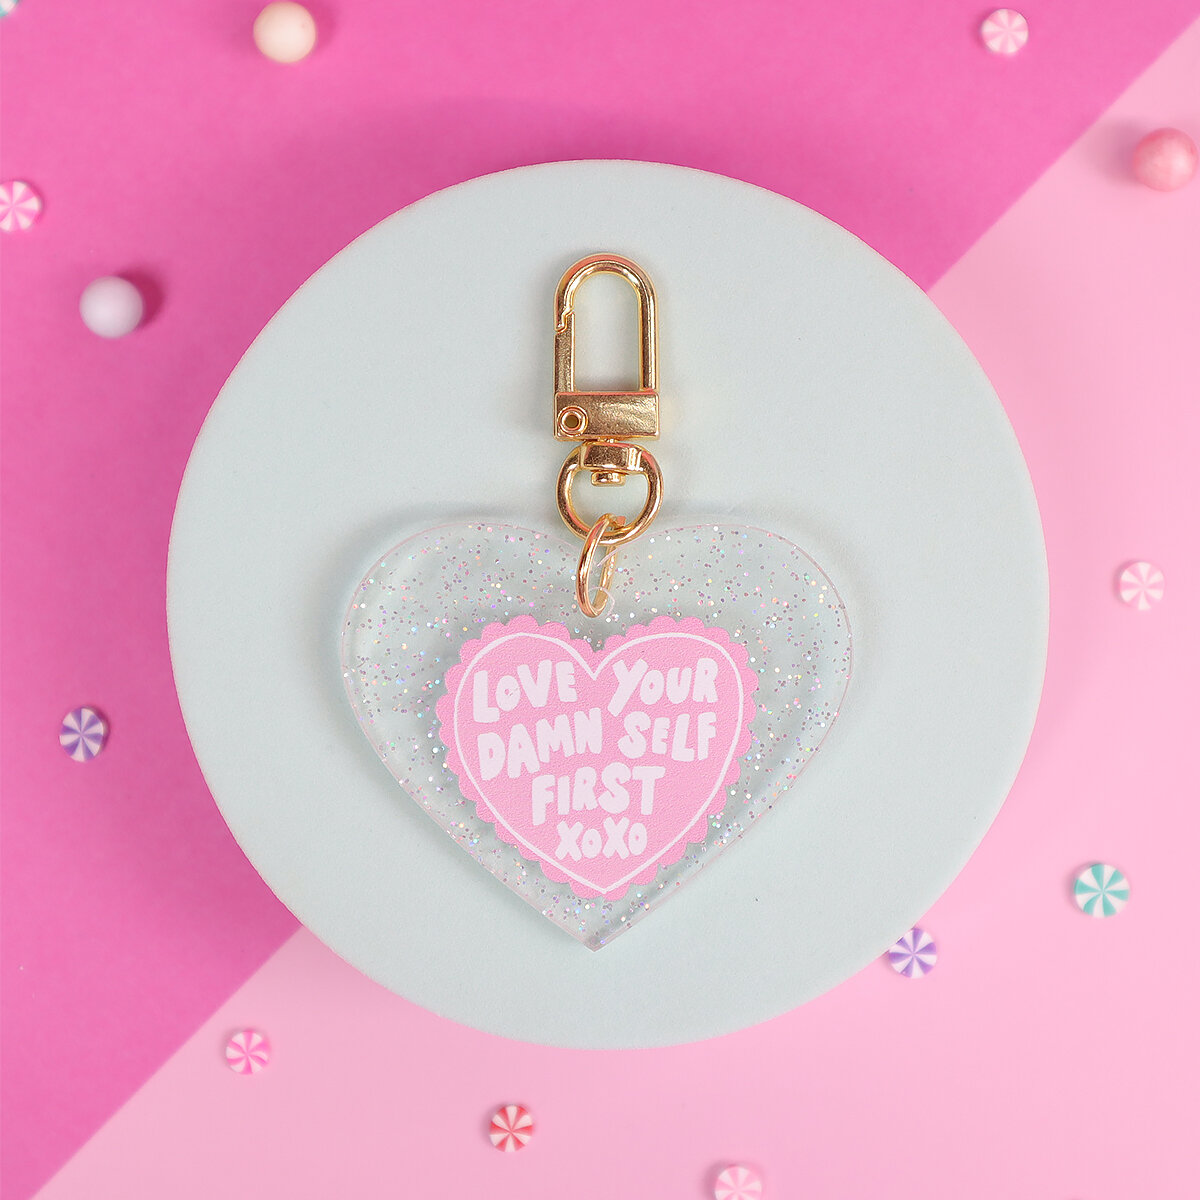 Glitter heart key ring - Love your damn self